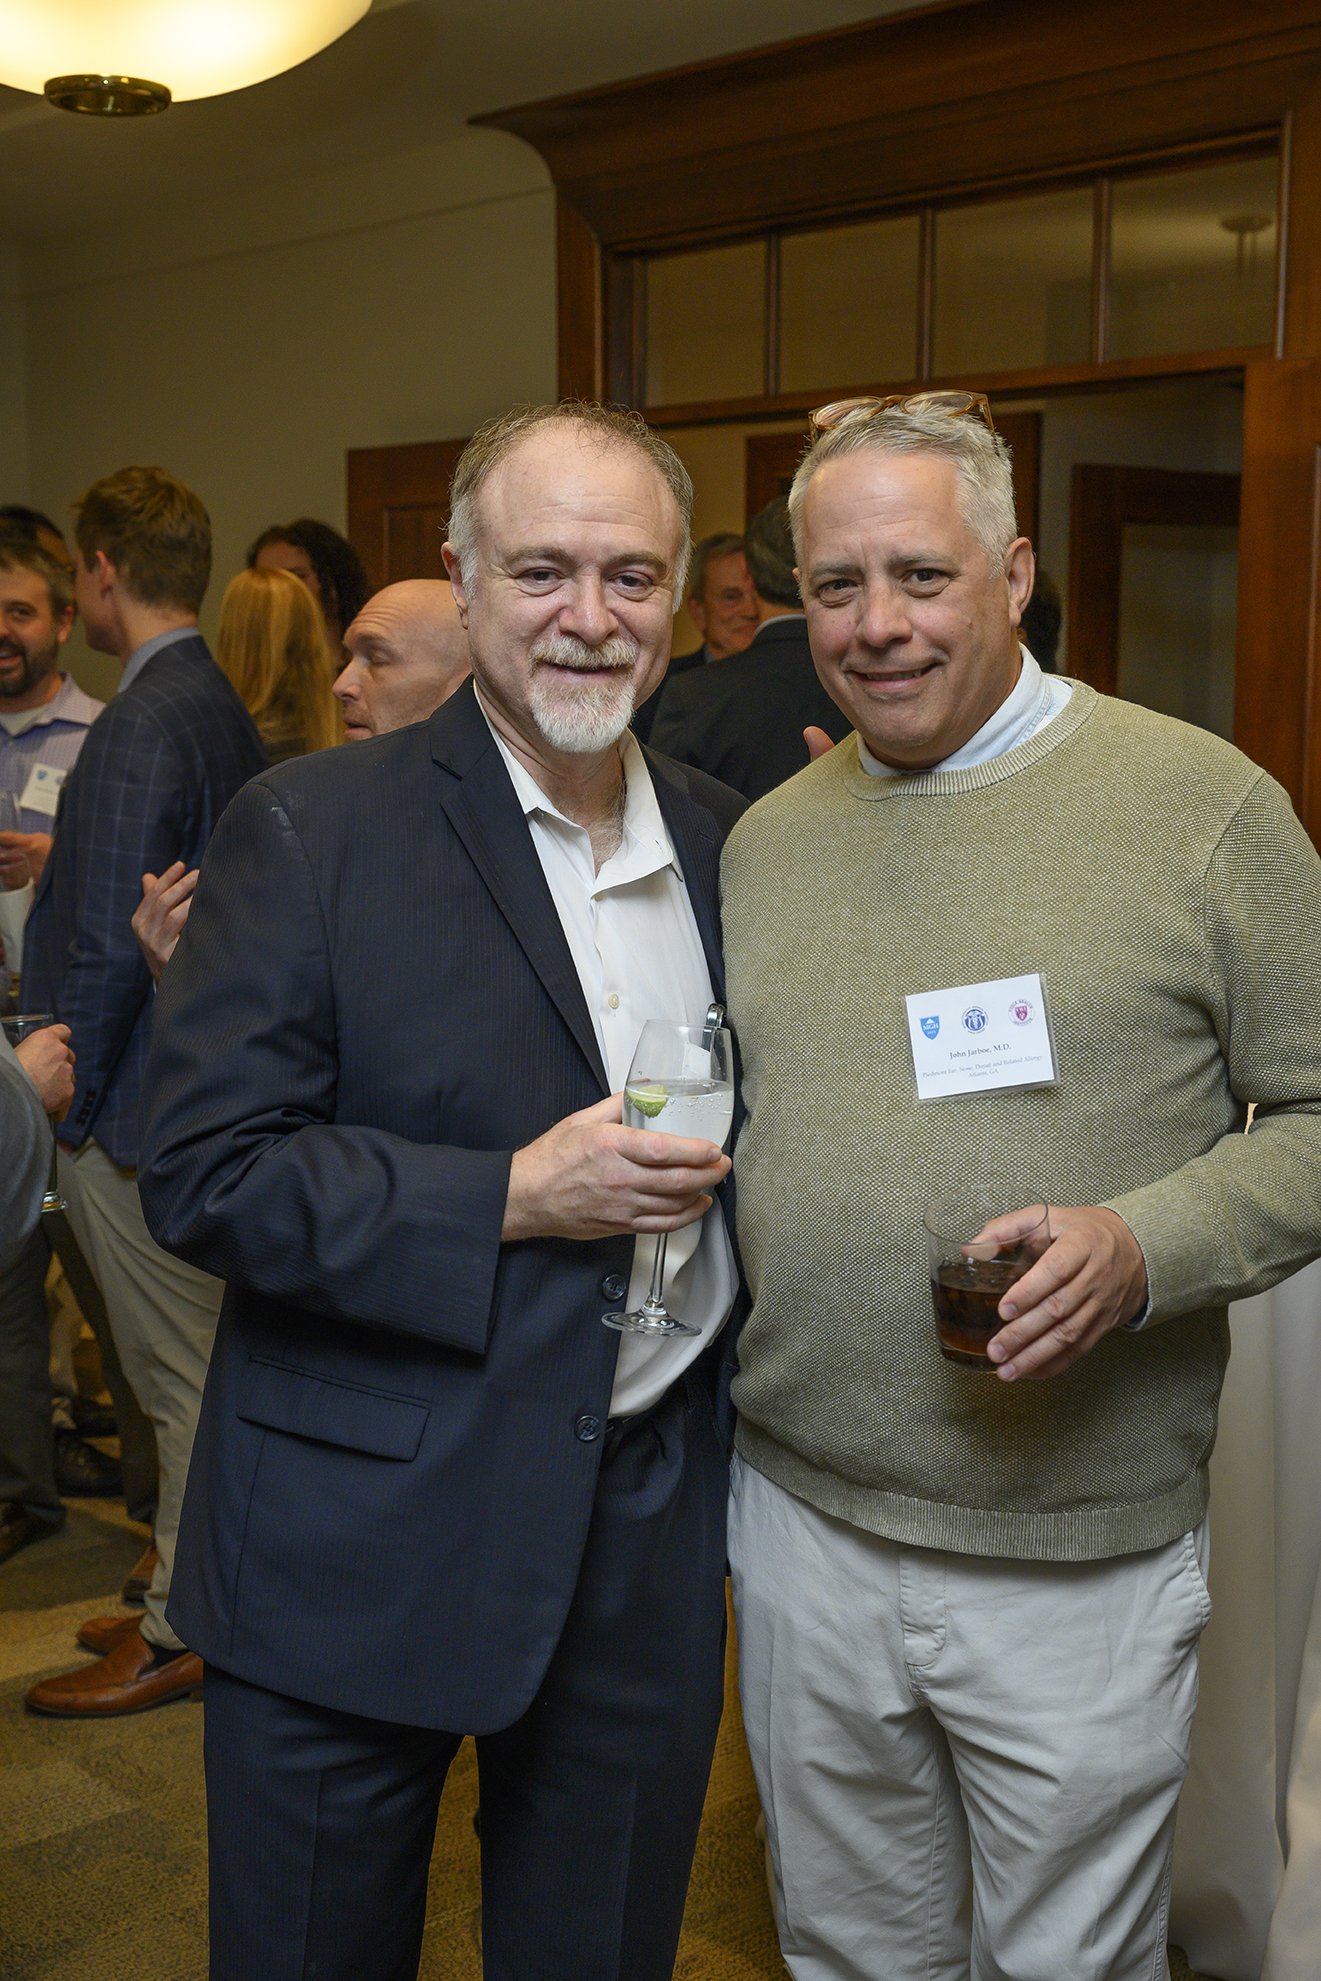 Drs. Steven Zeitels and John Jarboe